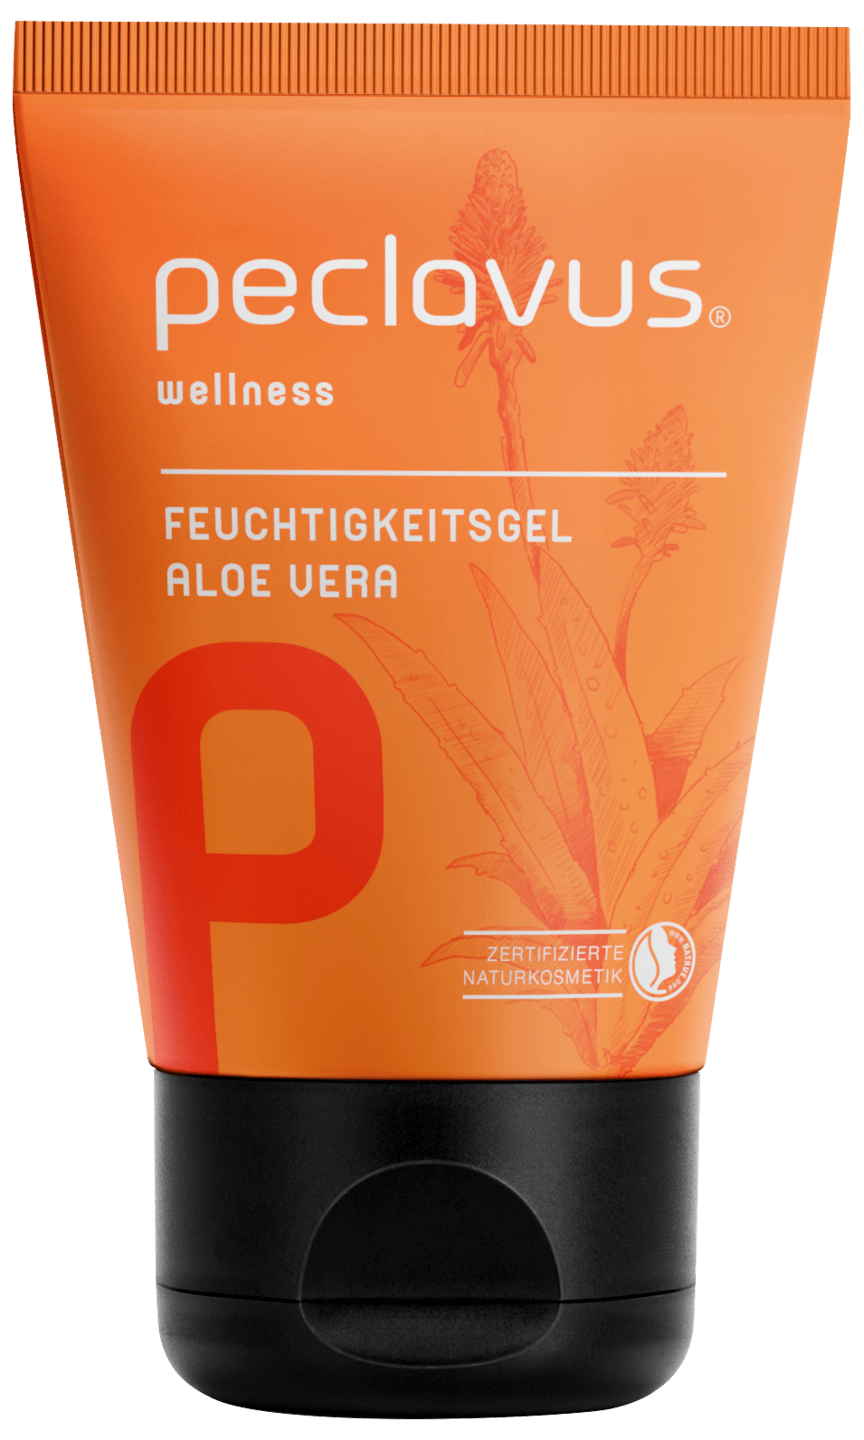 peclavus - Feuchtigkeitsgel Aloe Vera, 30 ml